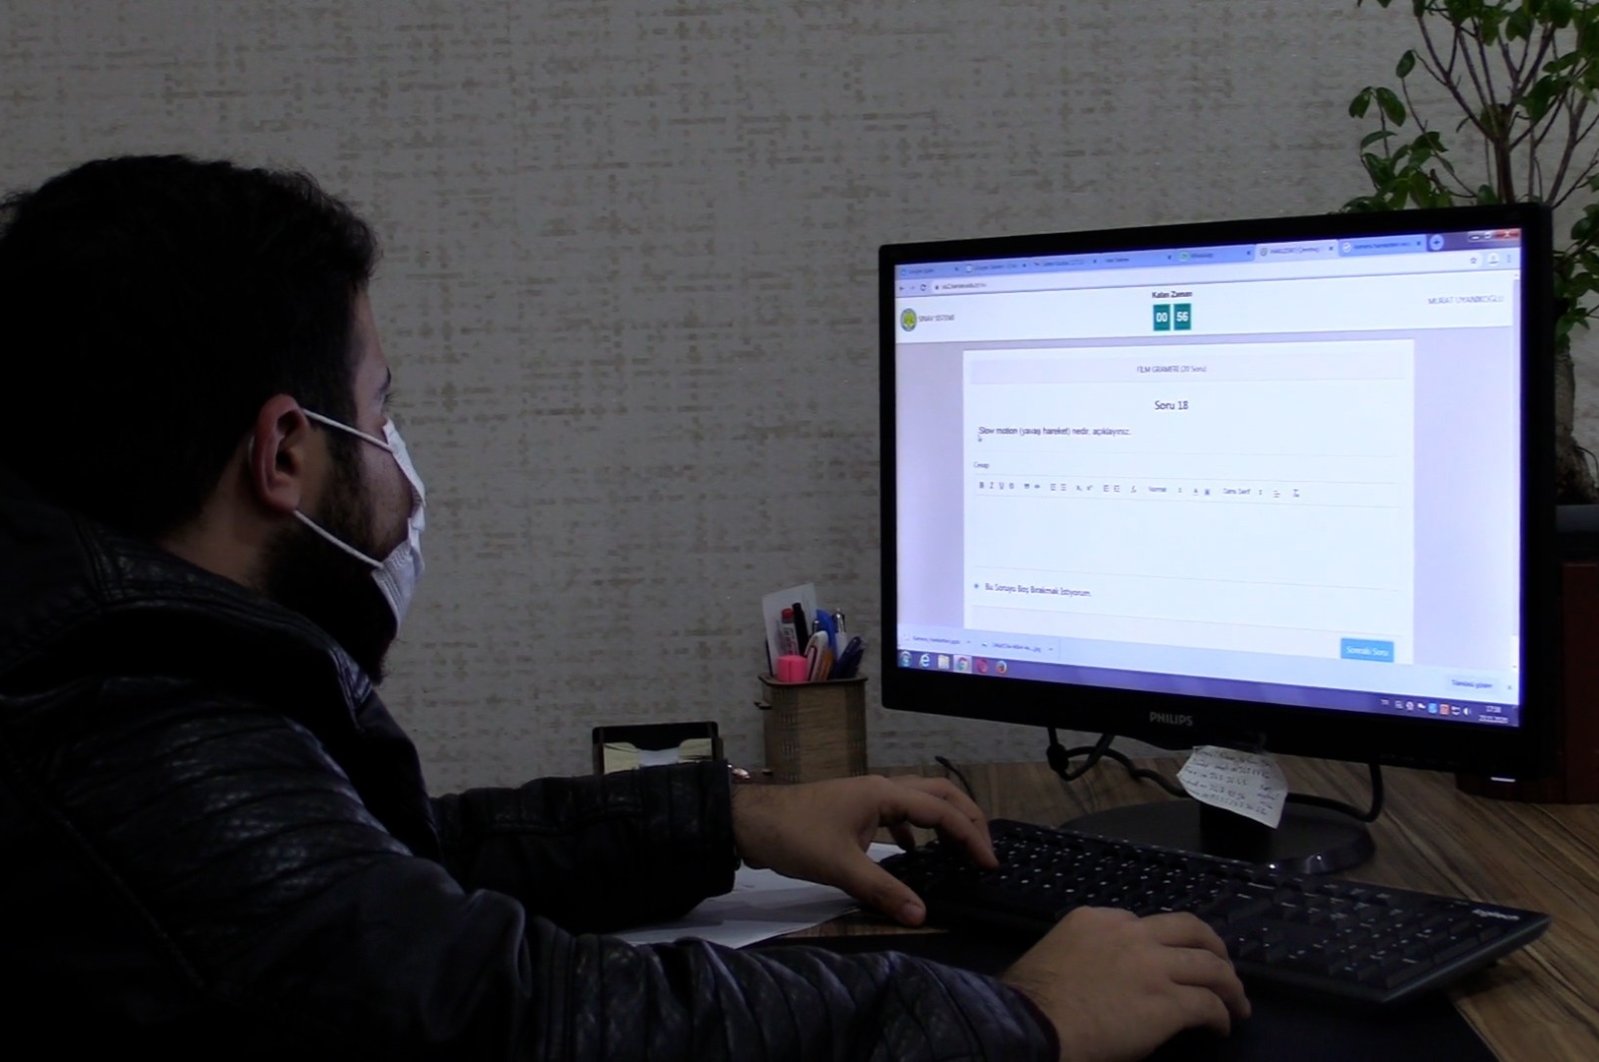 A student takes an online exam on a computer in the Karaköprü Municipality in Şanlıurfa province, southeastern Turkey, Nov. 24, 2020. (IHA Photo)